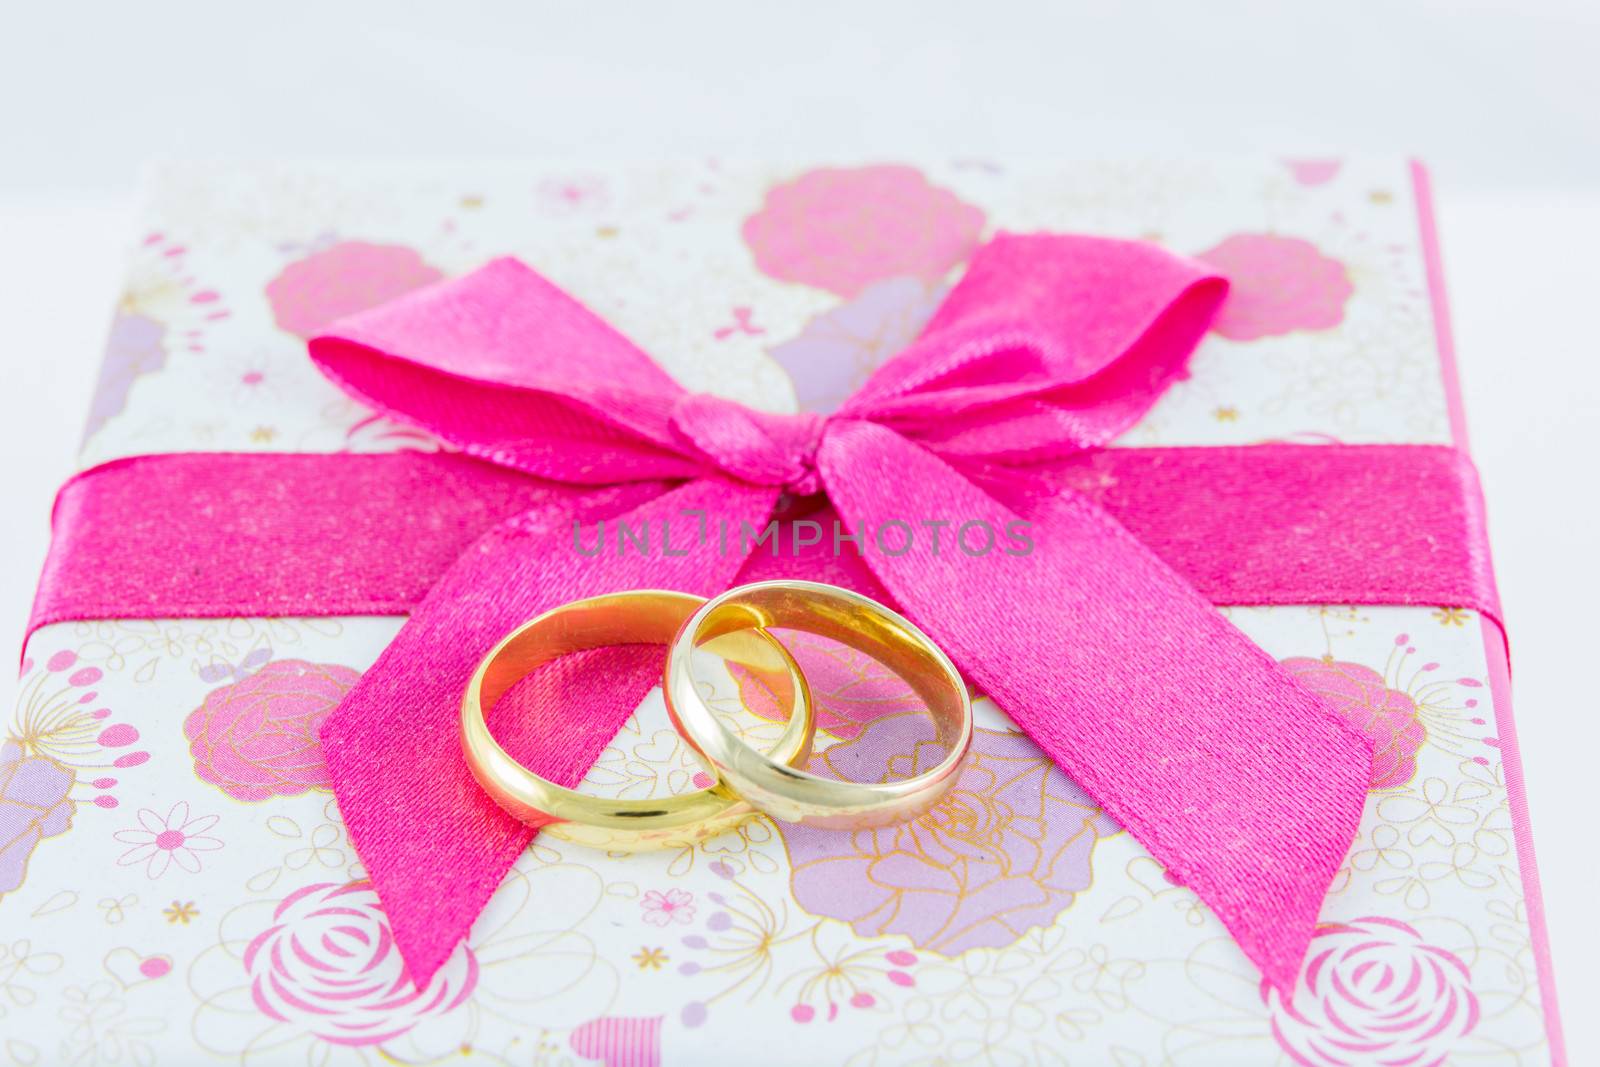 Wedding rings on gift box on white background